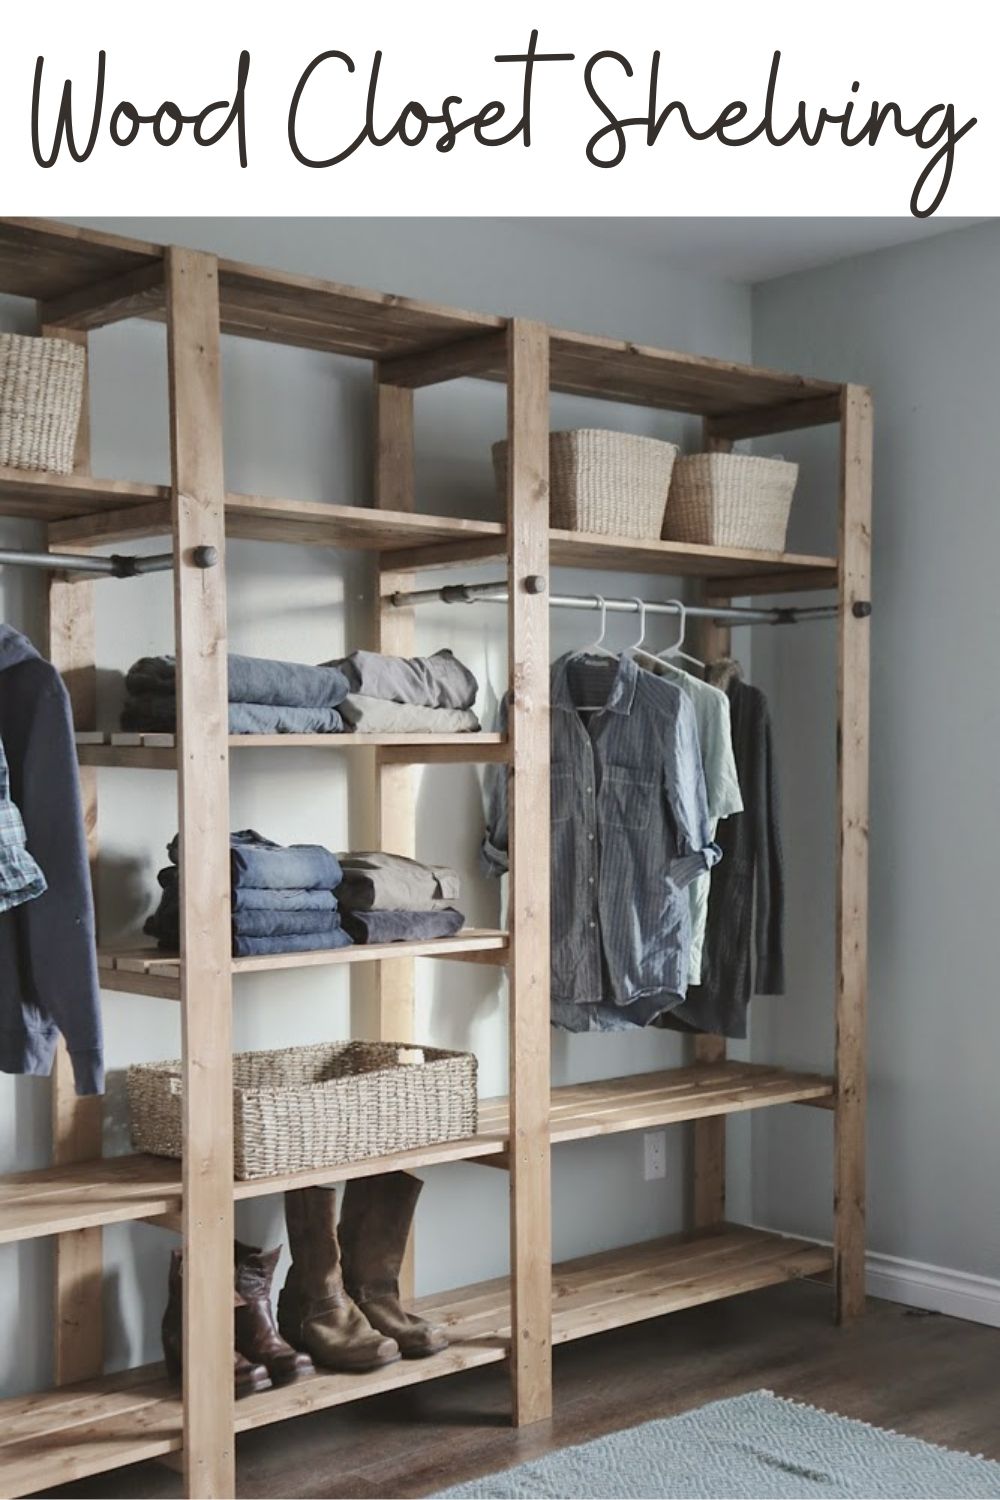 Wood Closet Shelving Ana White, How To Build Storage Shelves In Closet